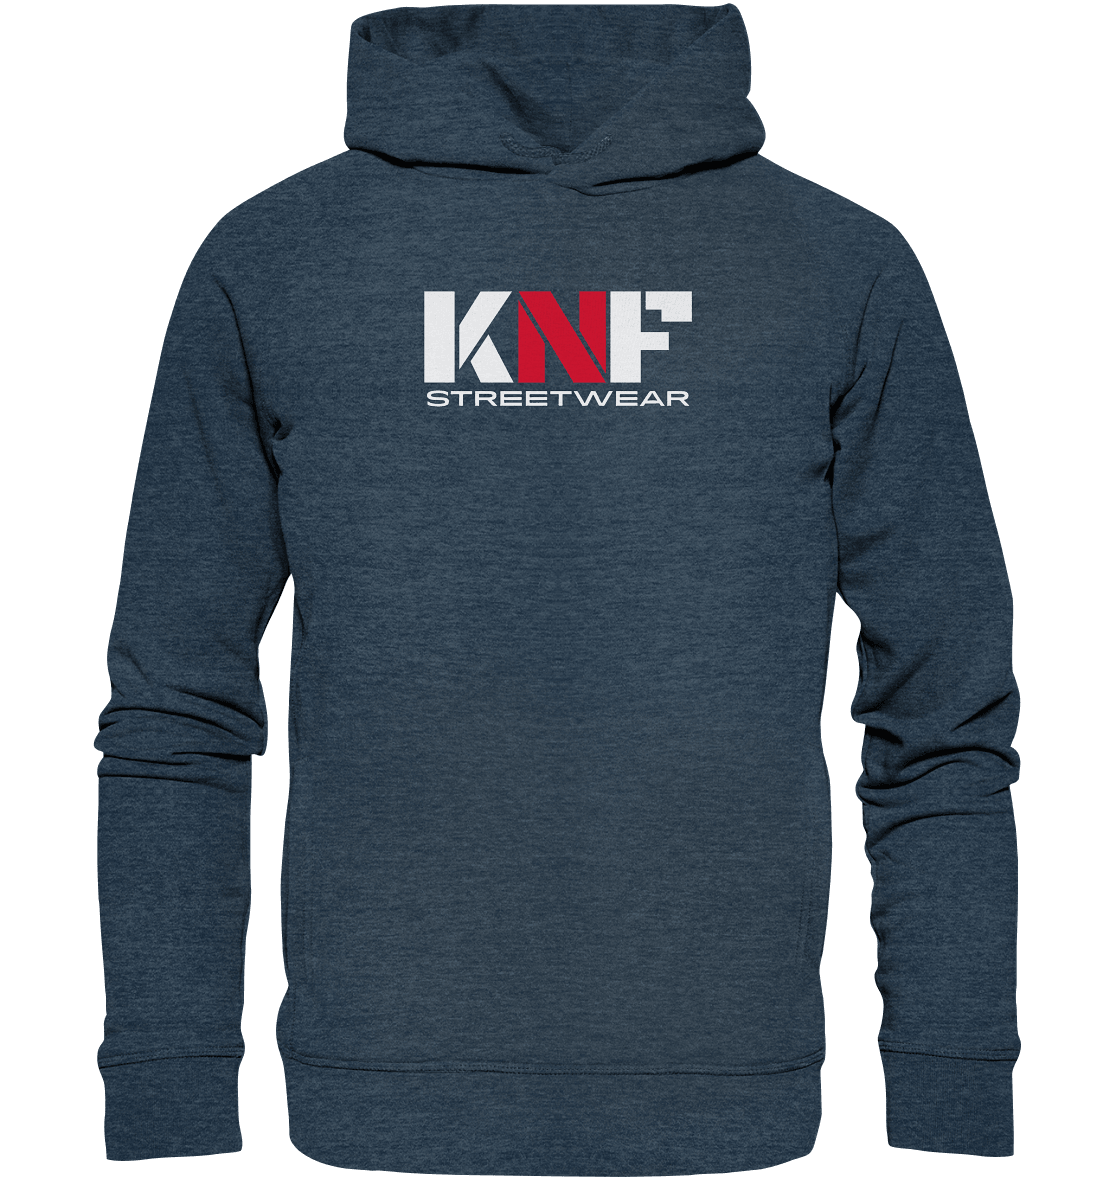 KNF "Claw marks" - Organic Fashion Hoodie - Snapshirts